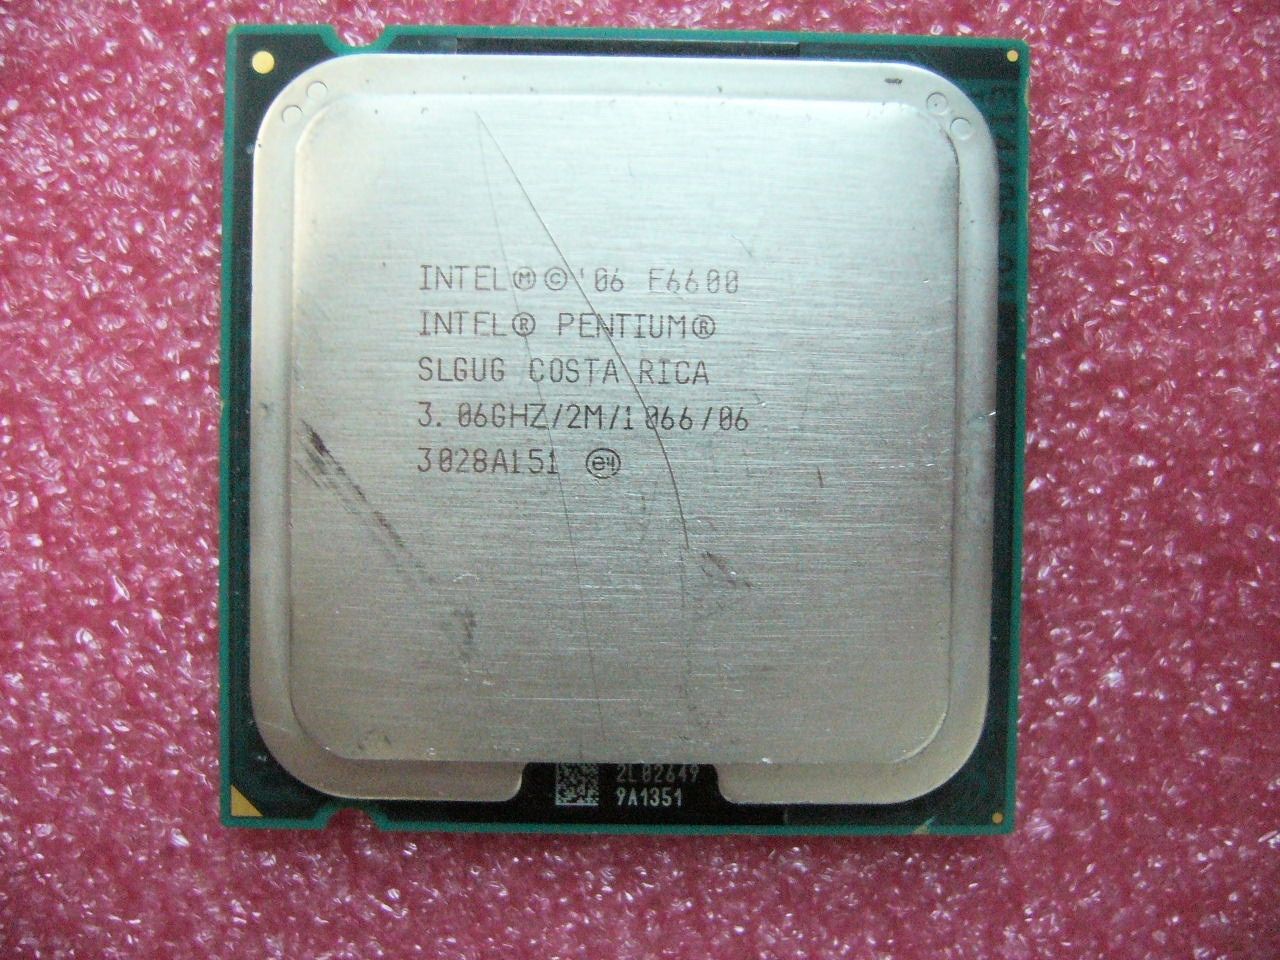 INTEL Pentium Dual Core E6600 CPU 3.06GHz 2MB/1066Mhz LGA775 SLGUG - Click Image to Close